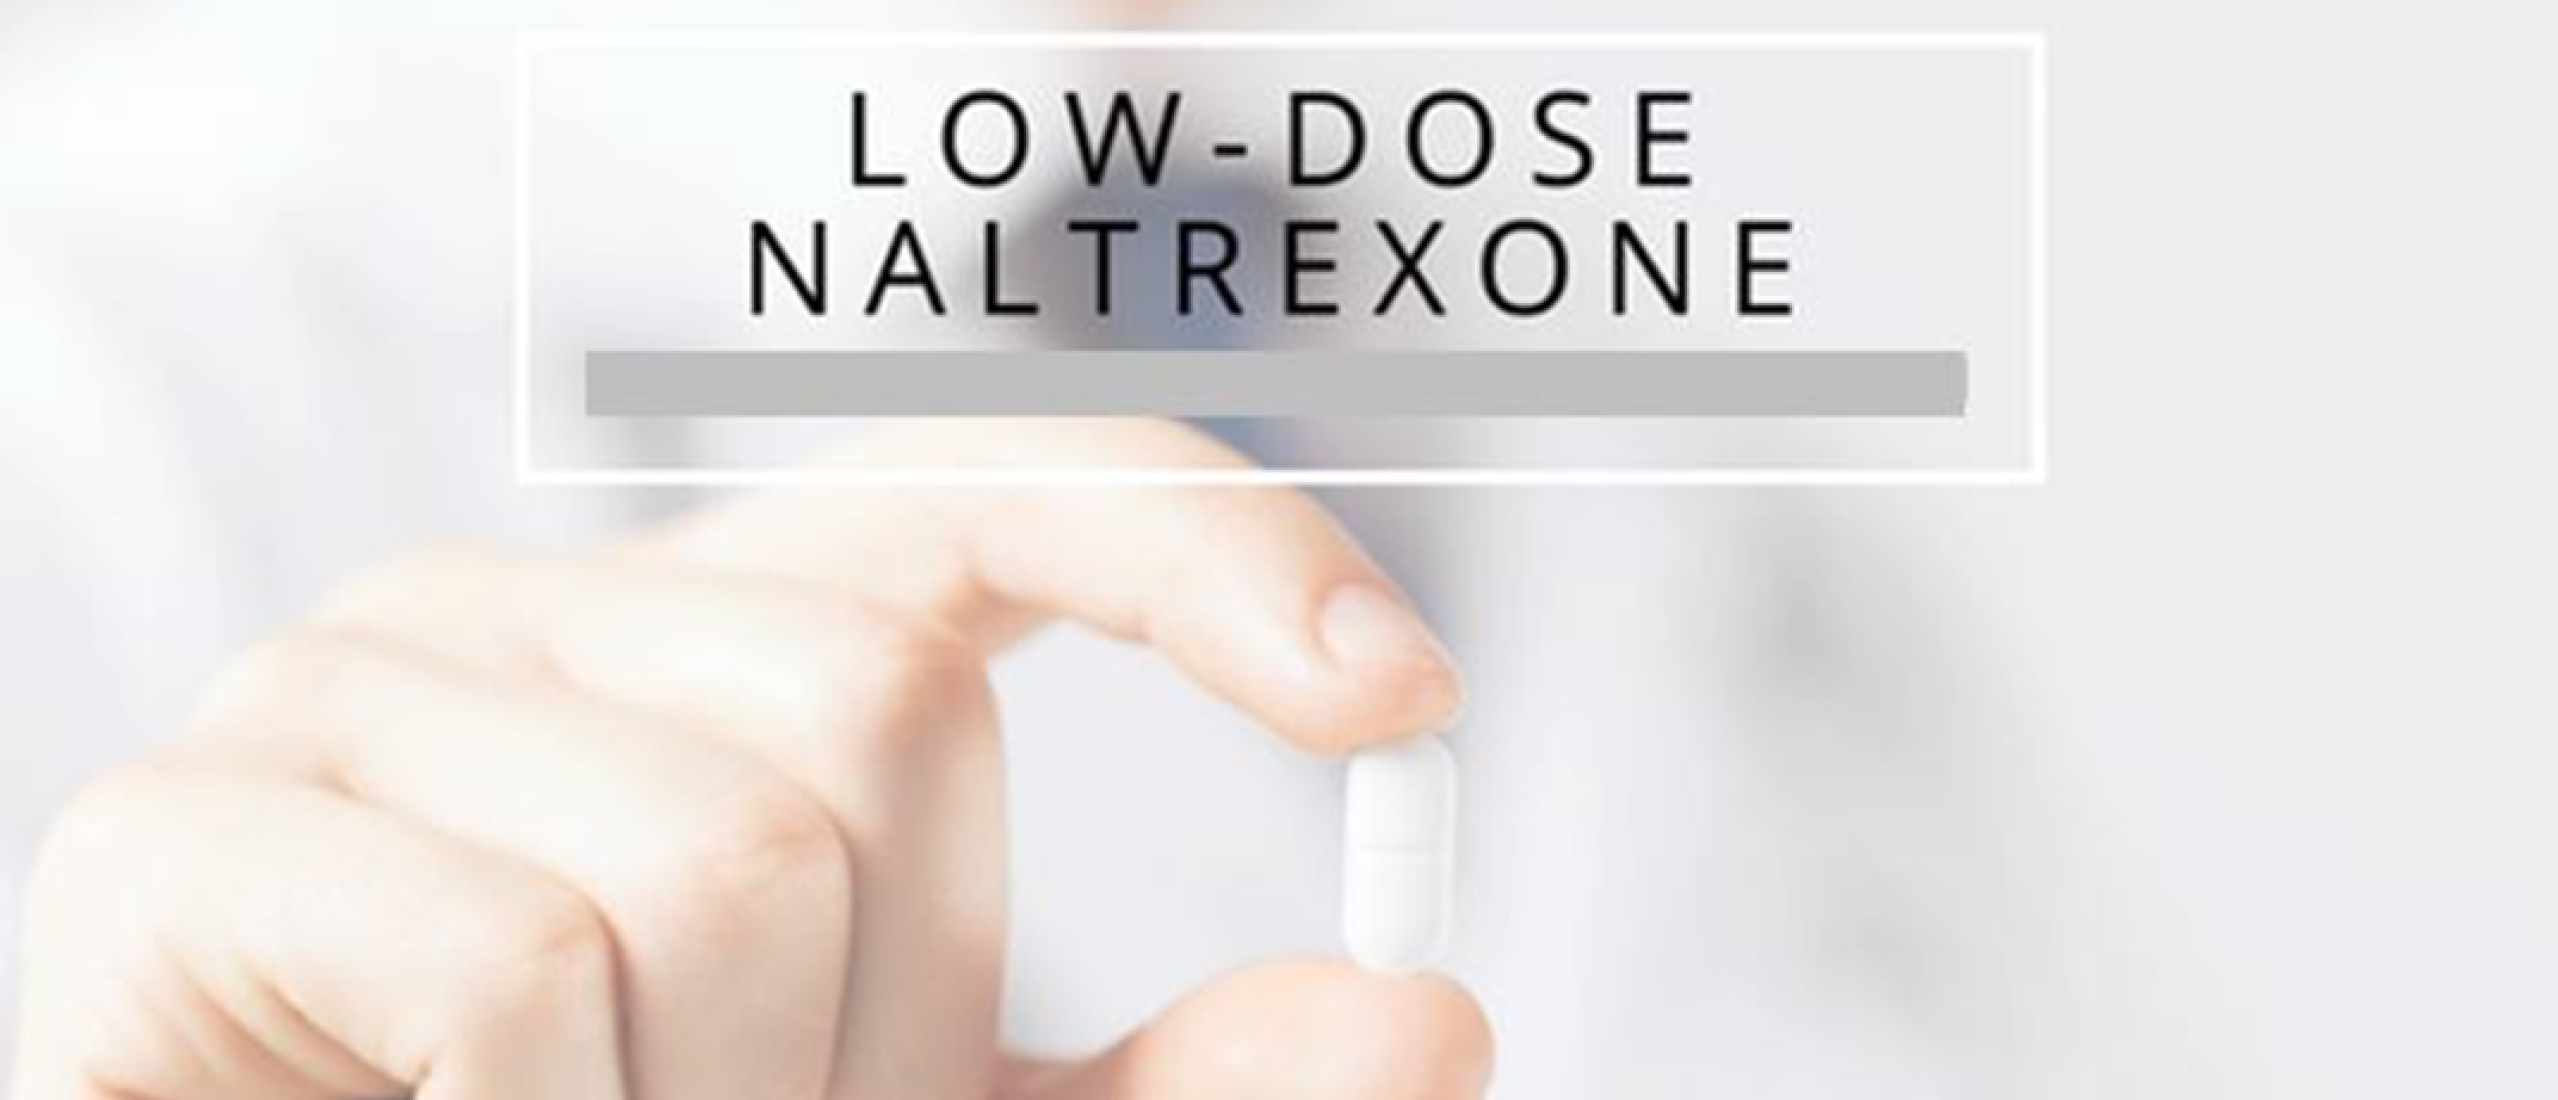 LDN - Low Dose Naltrexone